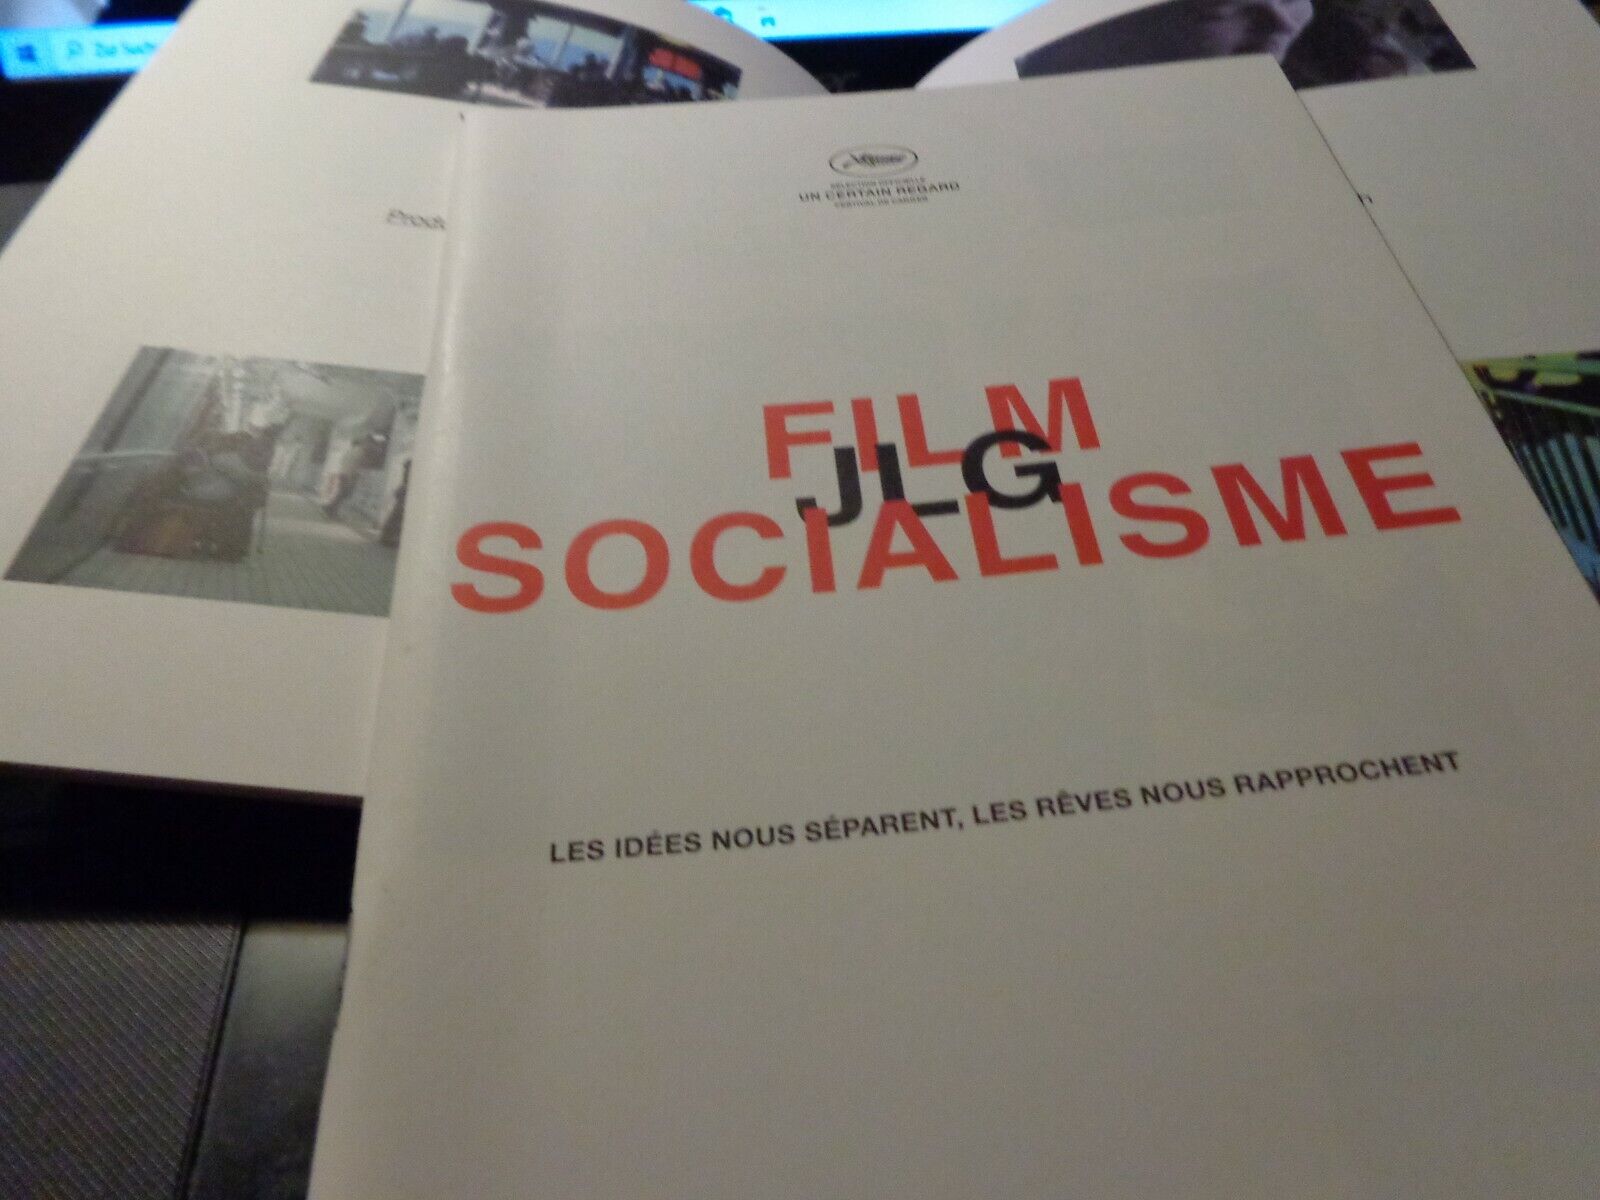 Jean-luc Godard Film Socialisme Pressbook Cannes 2010